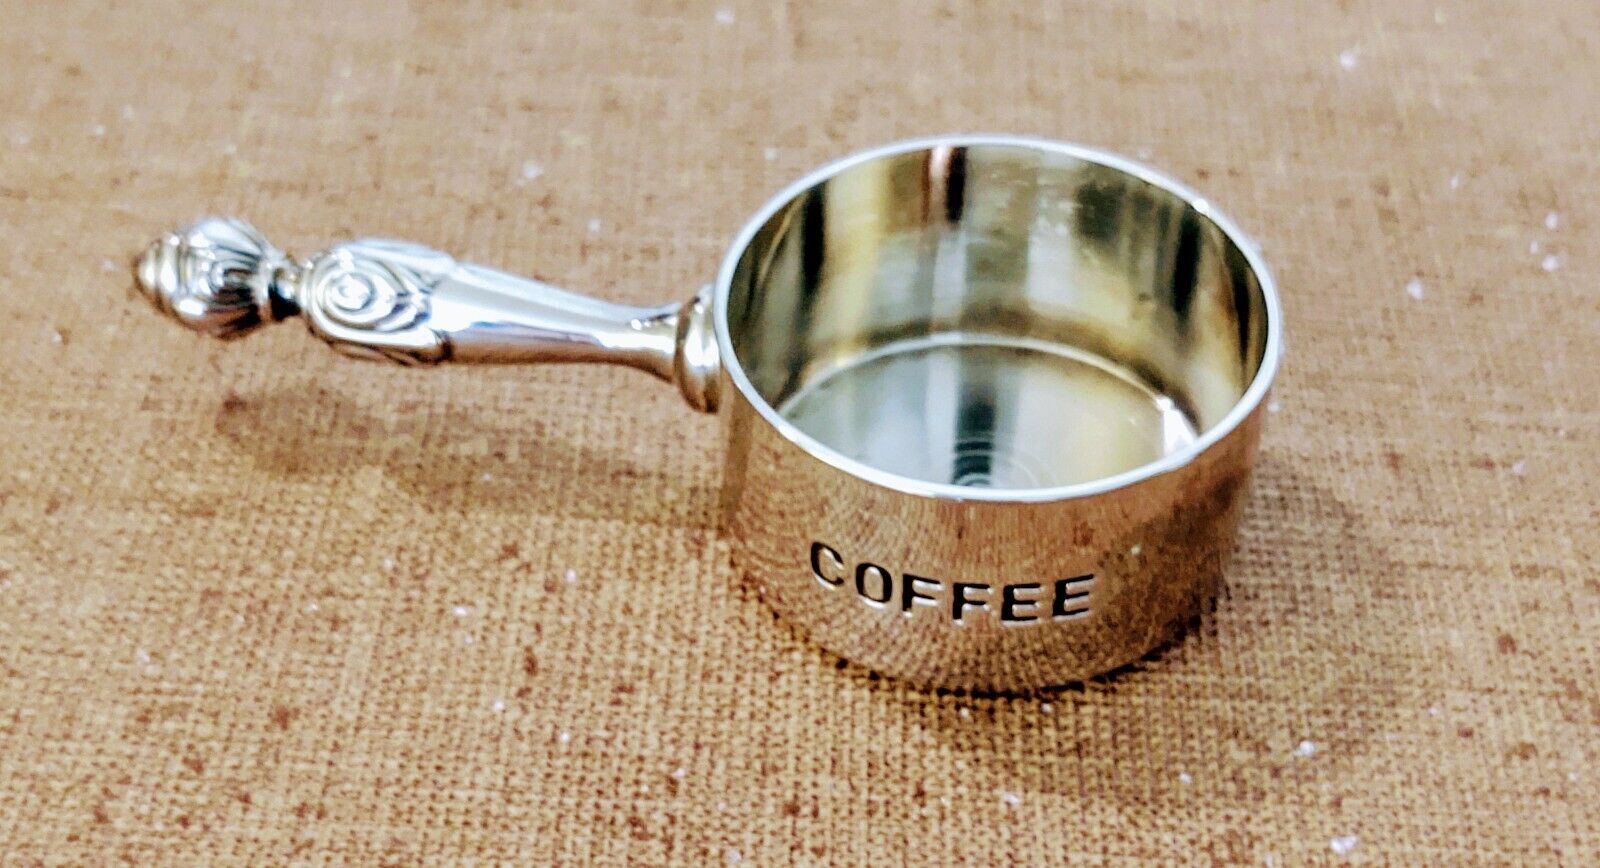 Vtg 1993 Towle Coffee Scoop Measuring Cup Figural Handle Diamond Cut S/P #3232